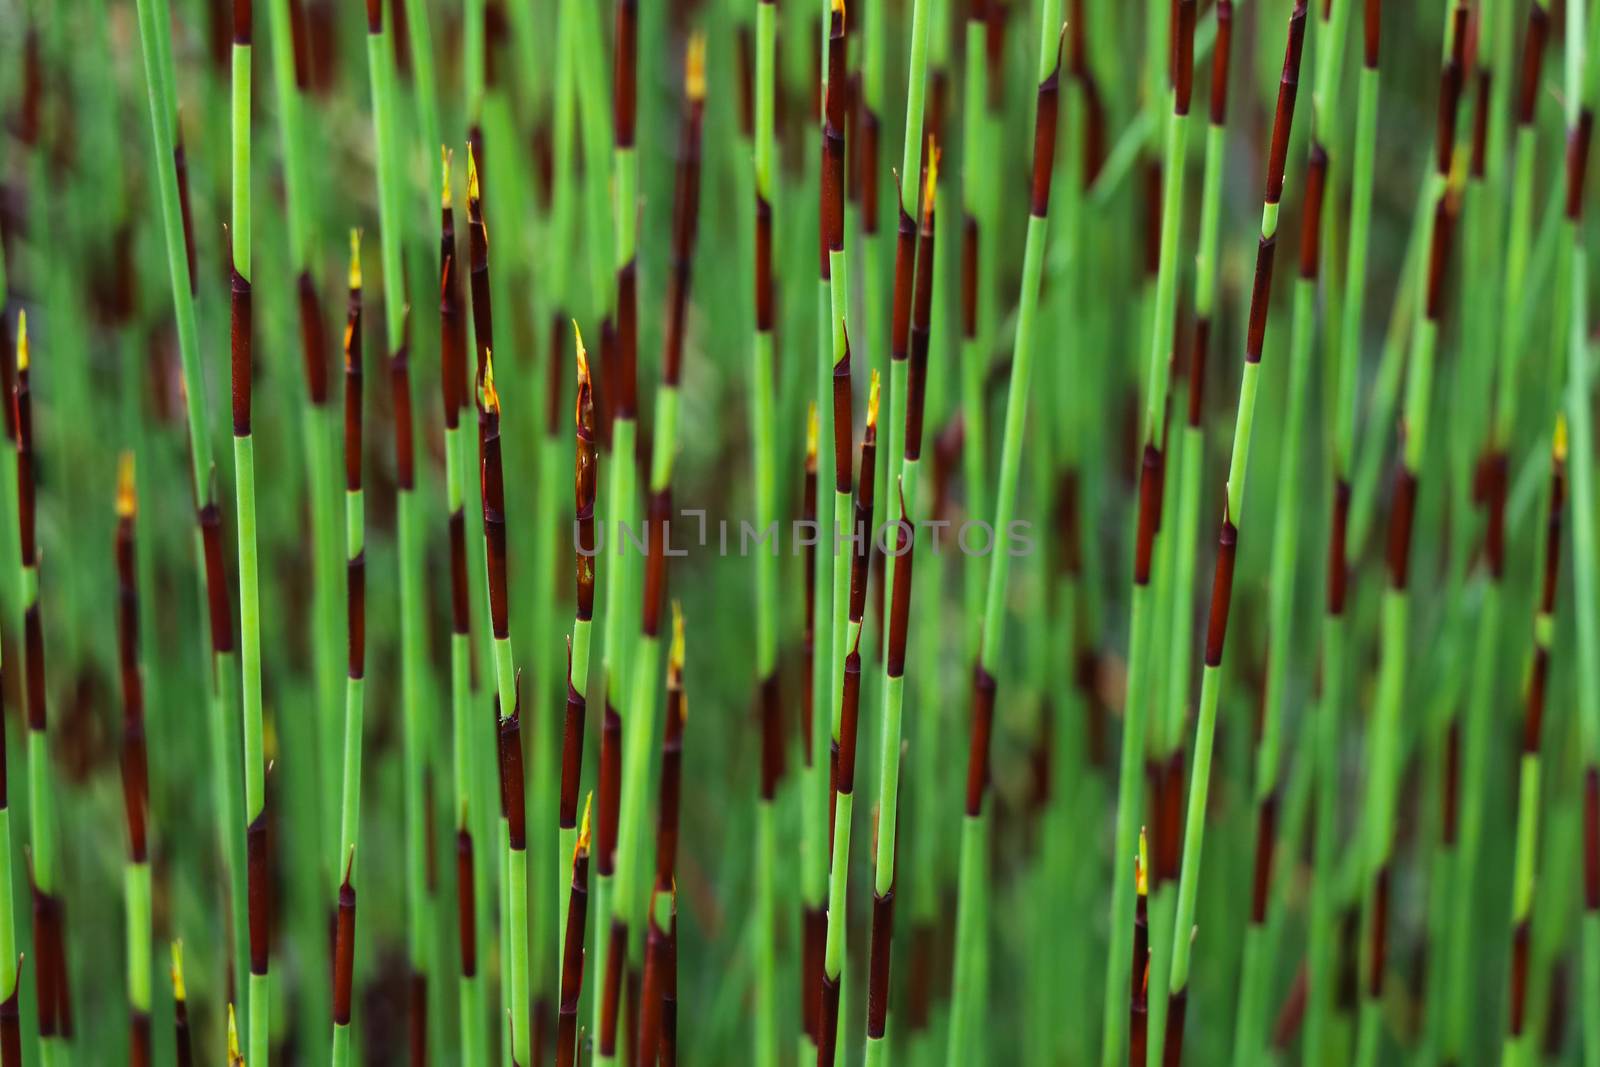 Bright Green Thatching Reed Restio (Chondropetalum tectorum) by jjvanginkel